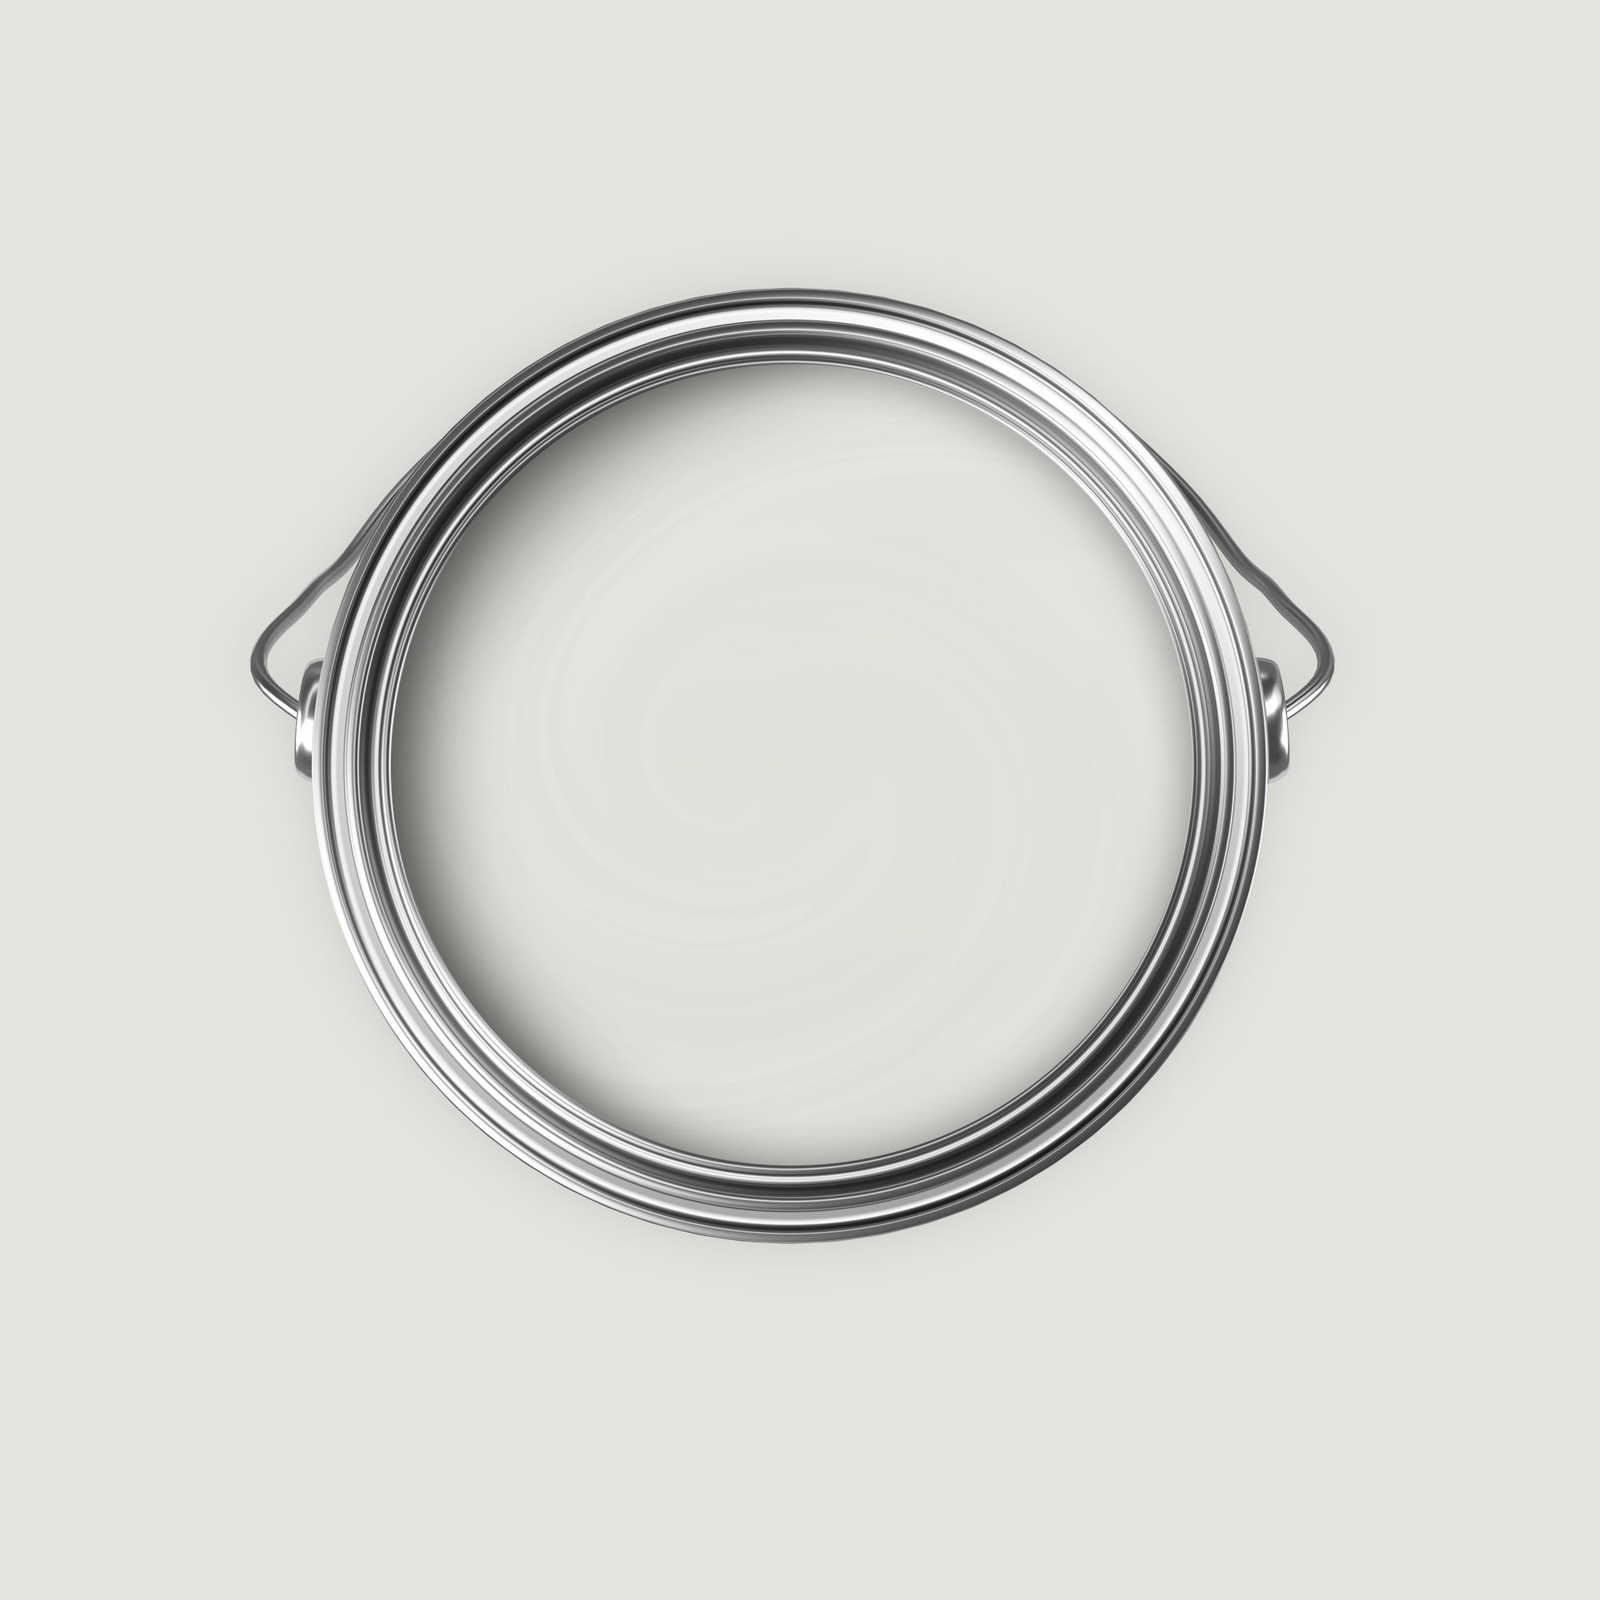             Premium Wall Paint cosy light grey »Creamy Grey« NW107 – 5 litre
        